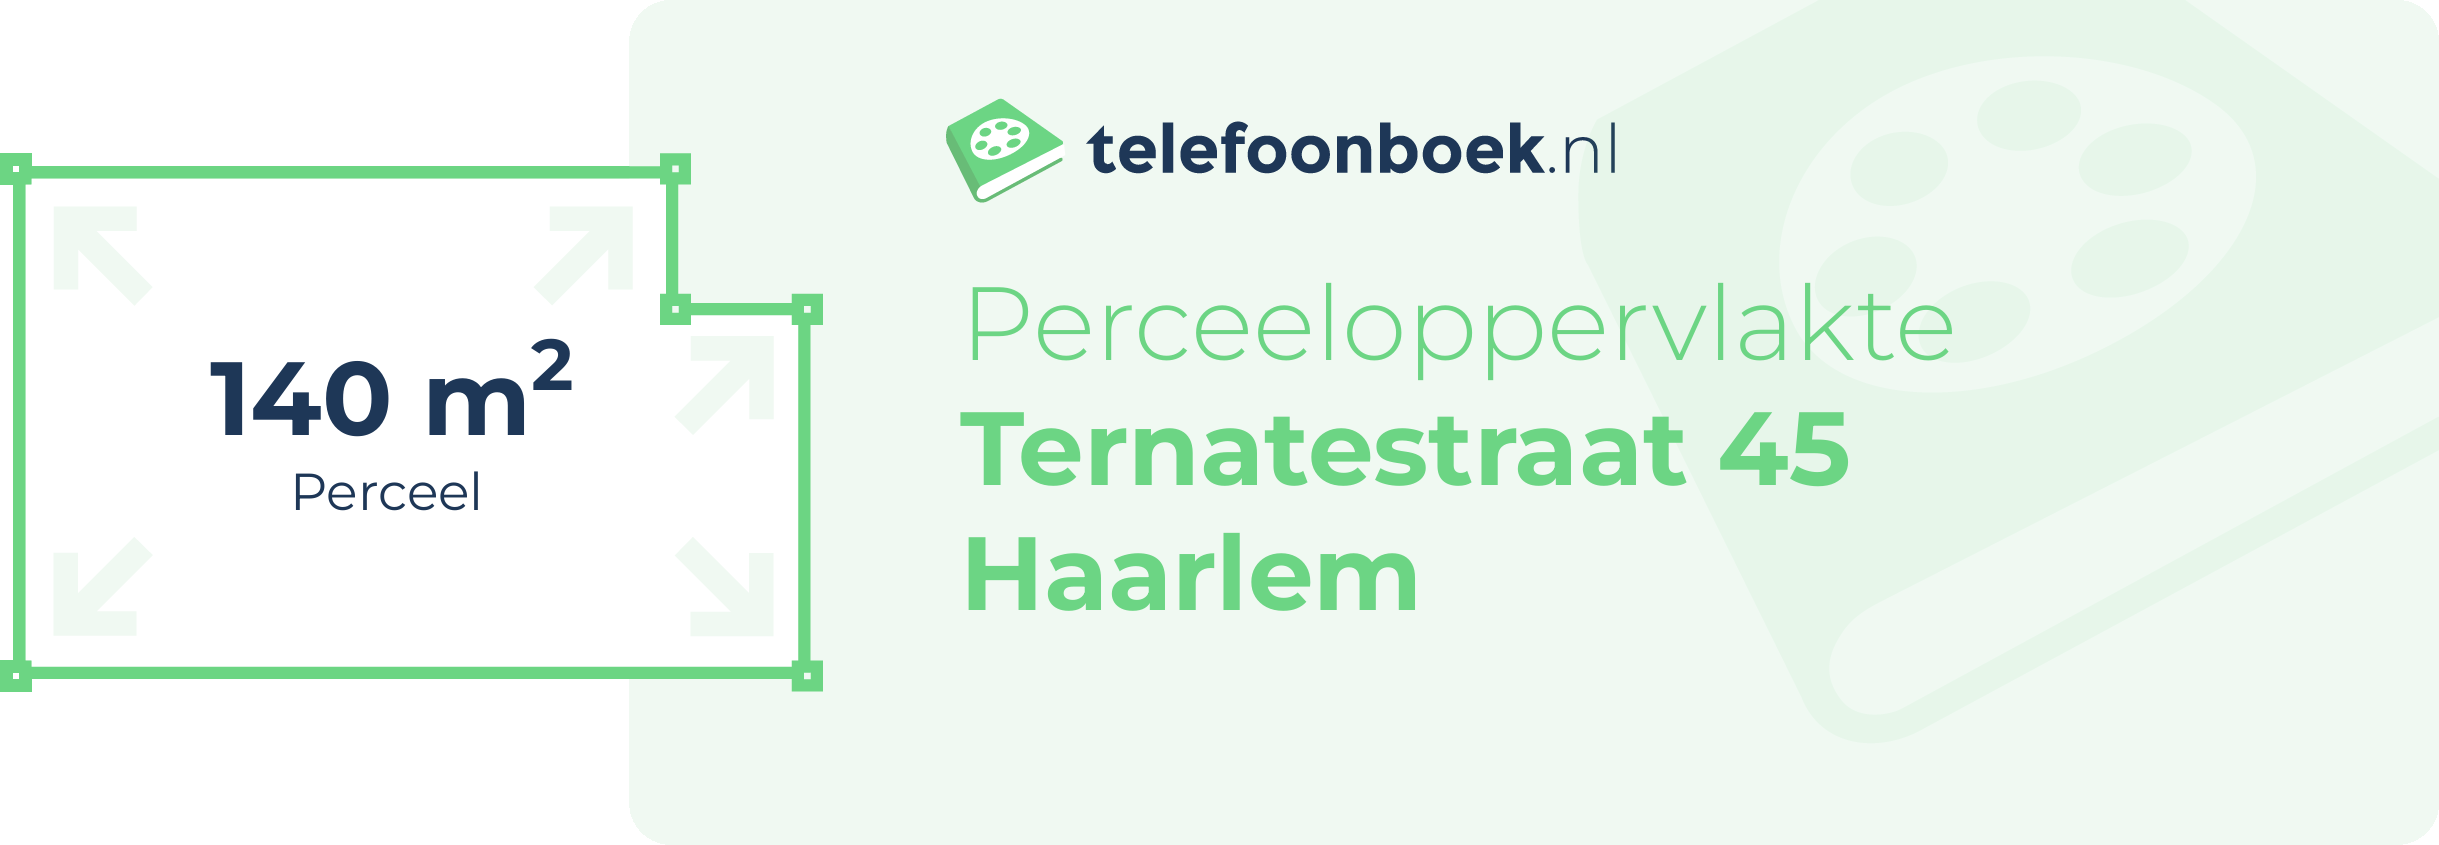 Perceeloppervlakte Ternatestraat 45 Haarlem